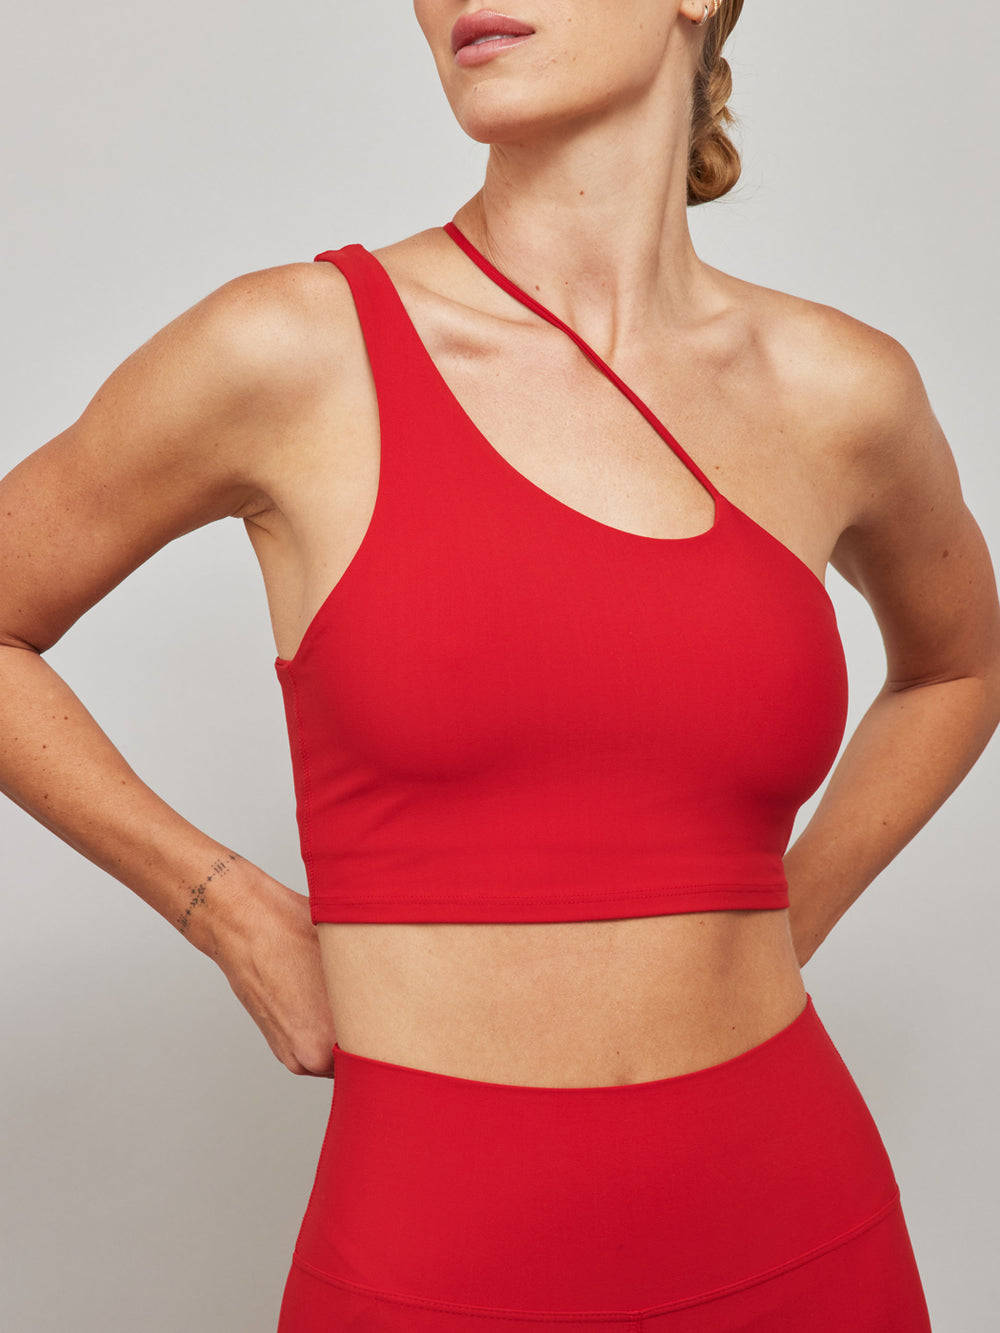 One Shoulder Convertible Bra Top in Melt - Haute Red